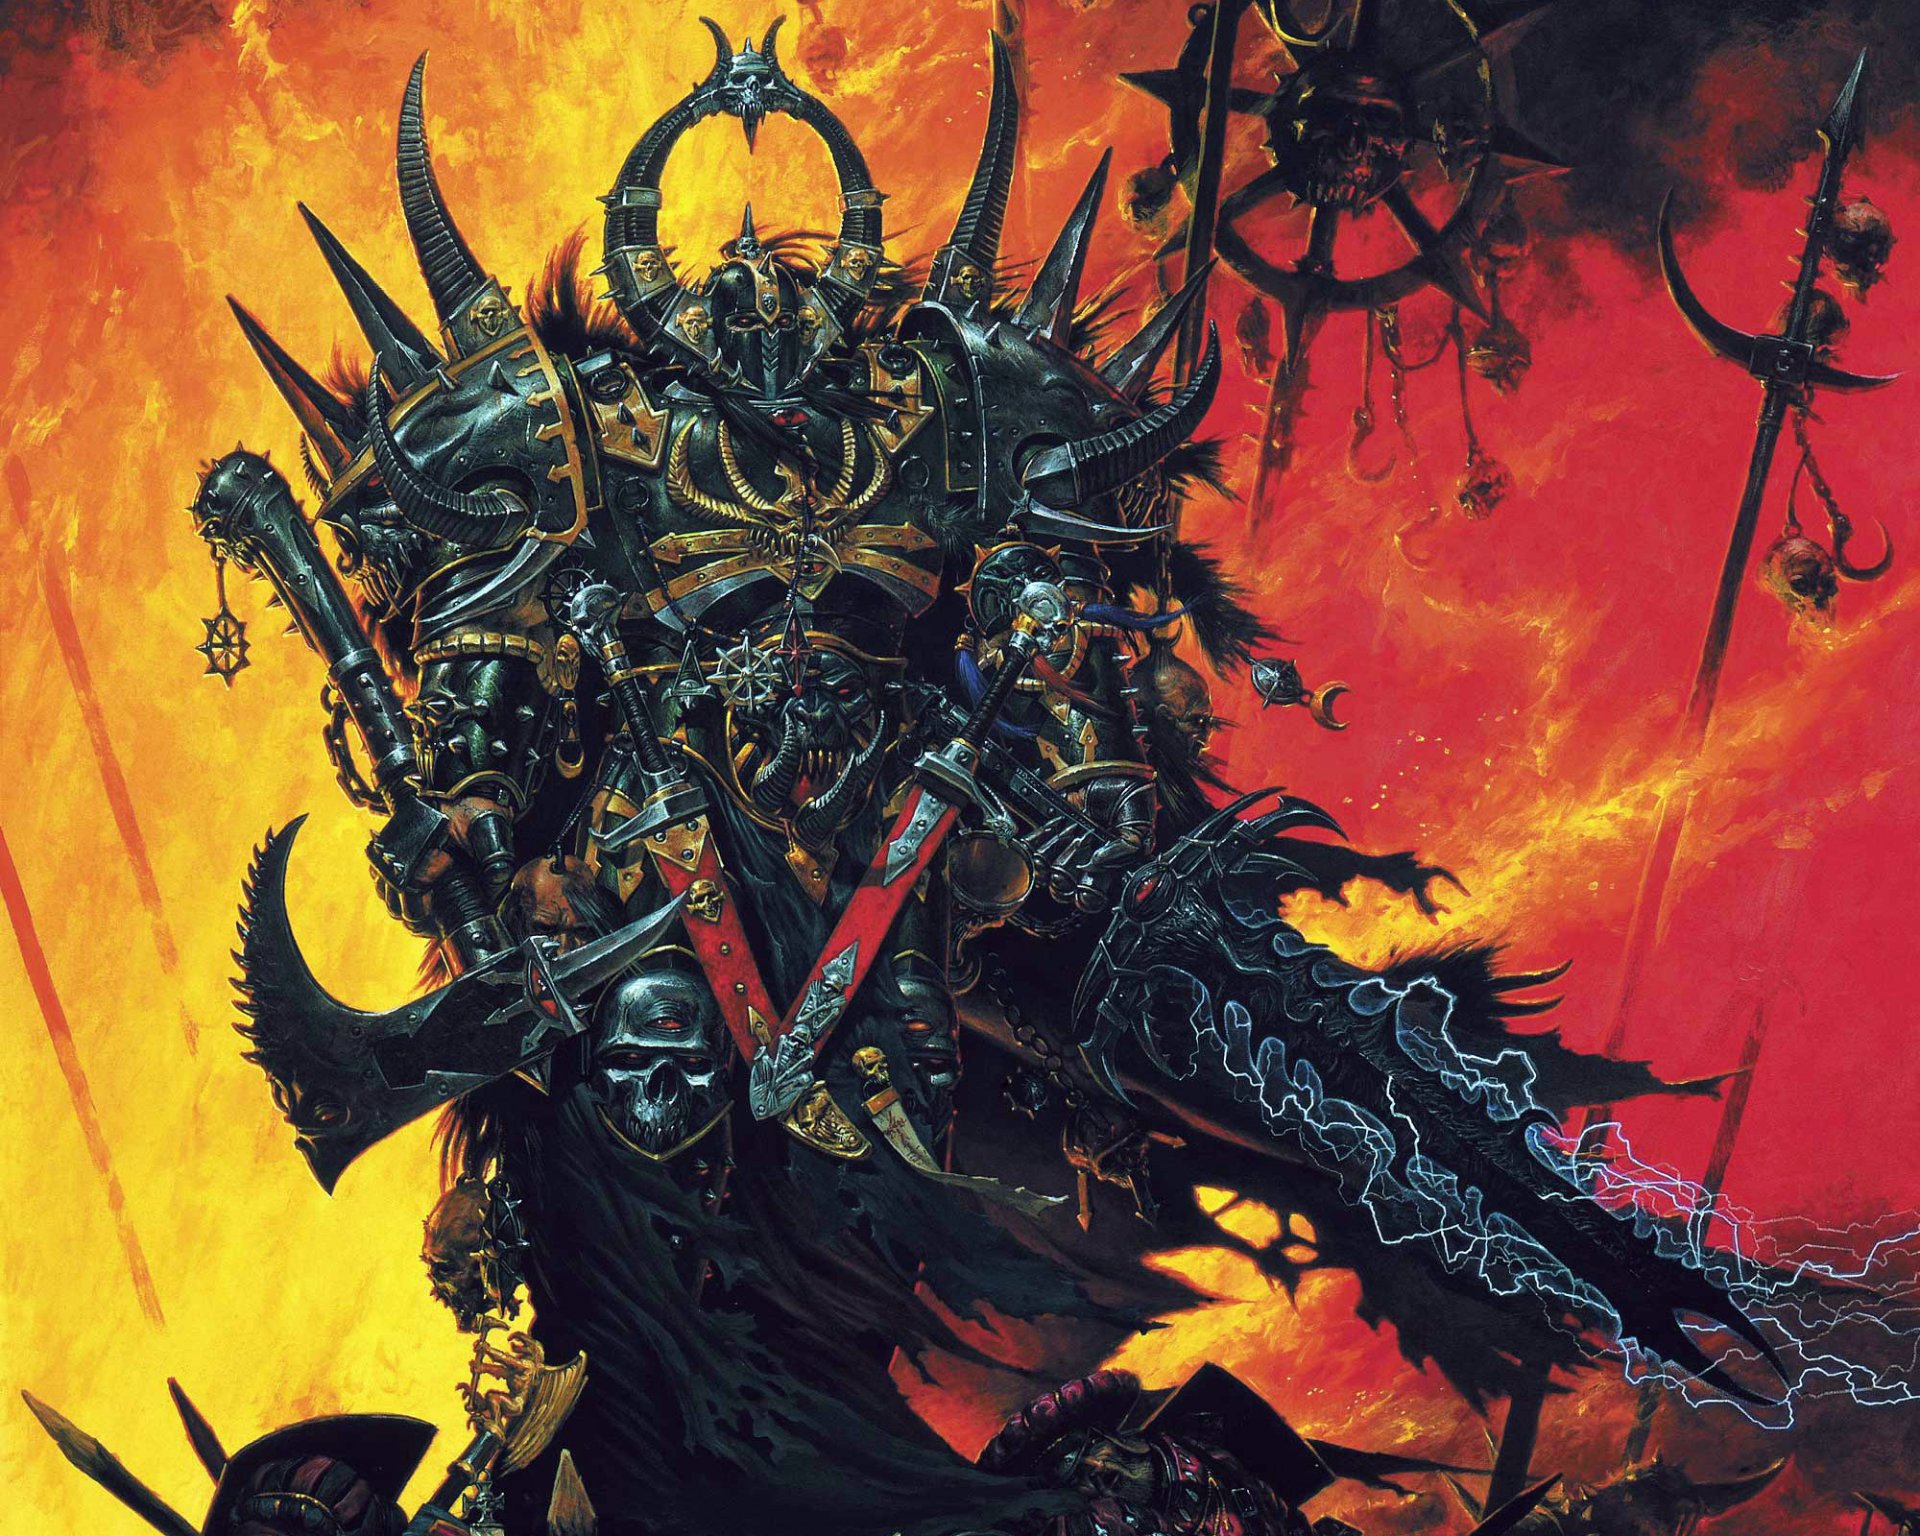 Hd Wallpaper Warhammer Fantasy Battles Champion Khorne Warrior Chaos Armour Sword Axe Corpses 9472